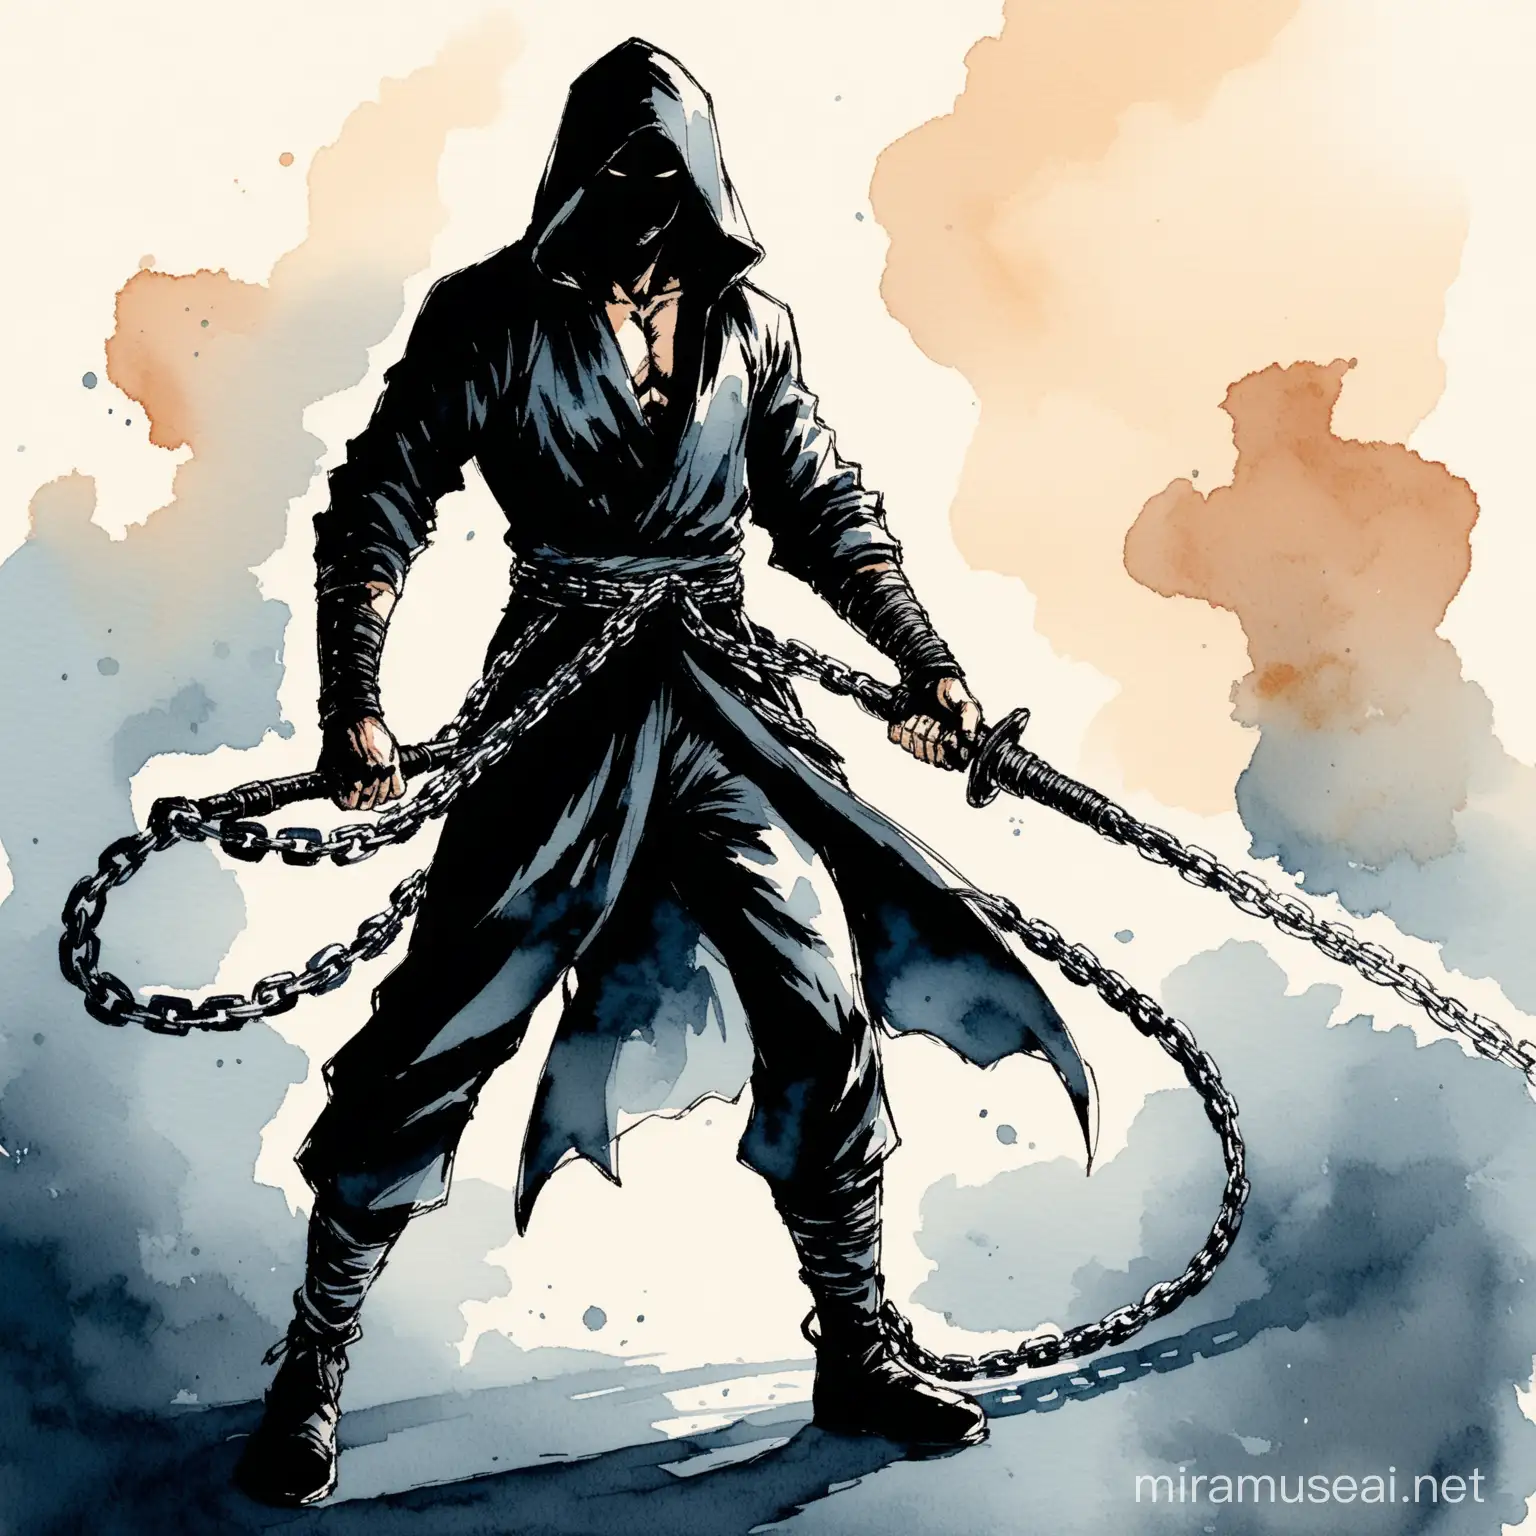 Shadow Warrior Wielding Chain Whip in Dark Watercolor Style